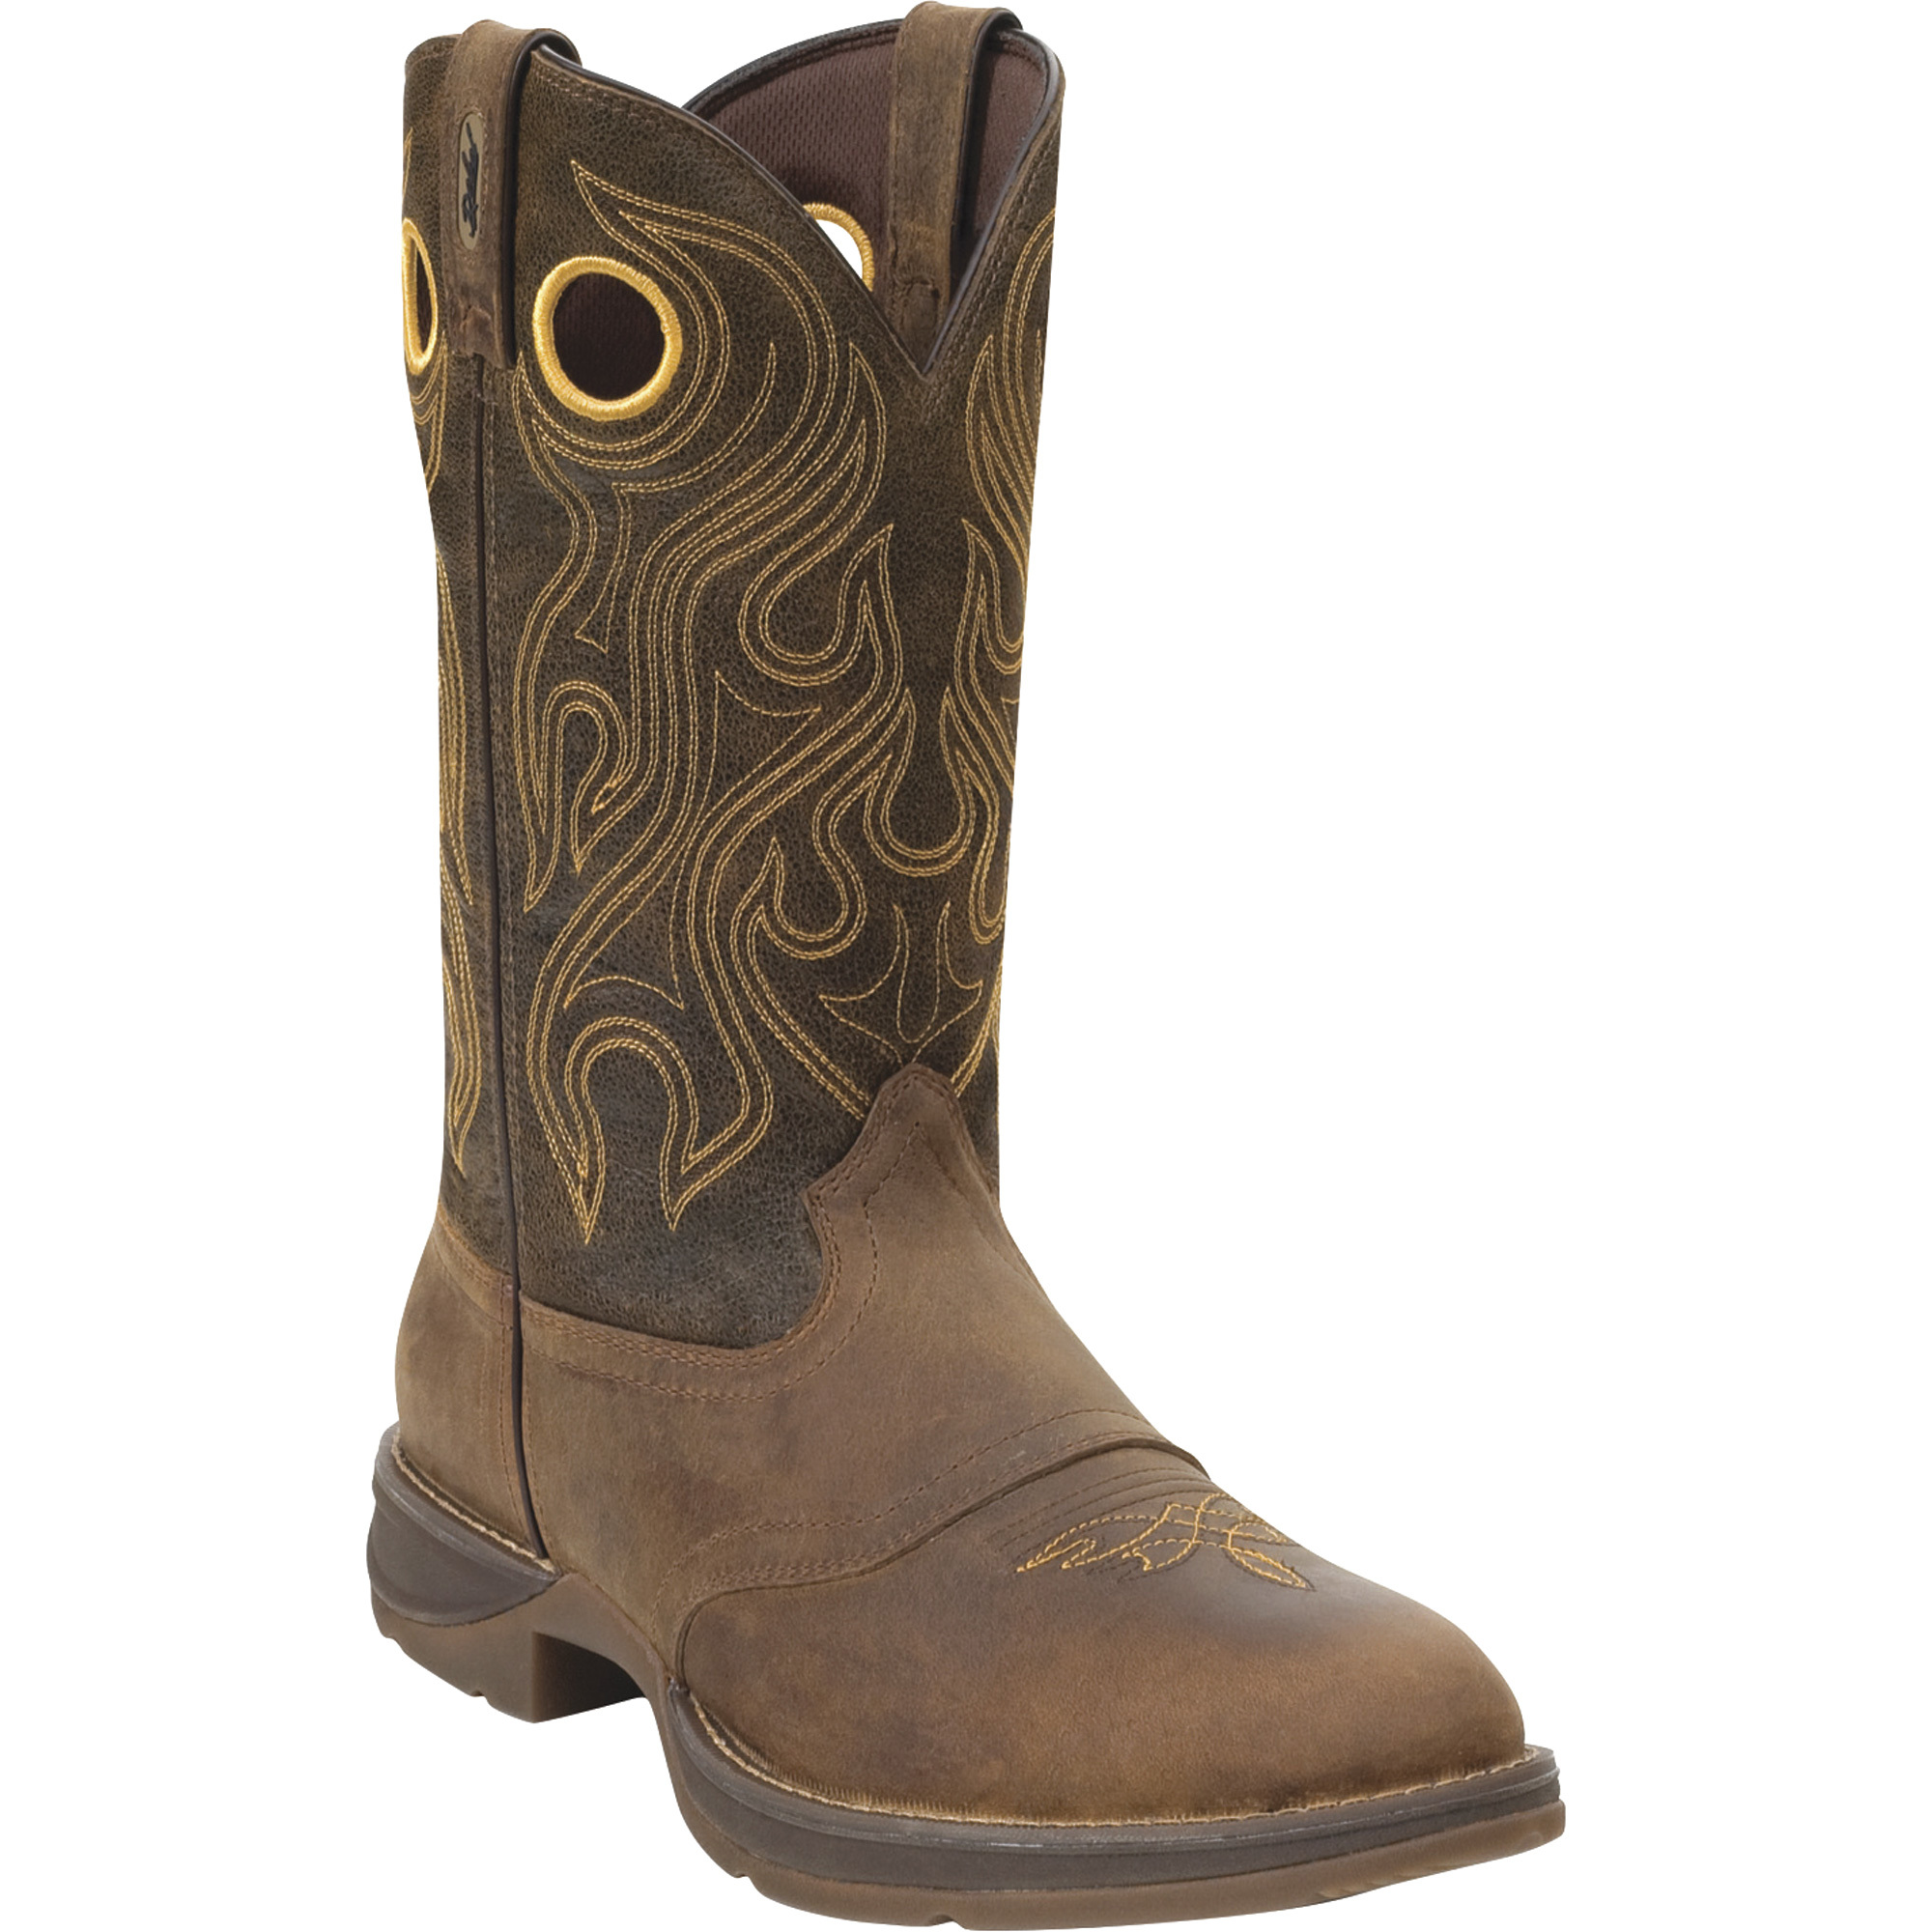 Durango Men's Rebel 12Inch Saddle Western Boot - Brown, Size 8 1/2 Wide, Model DB 5468